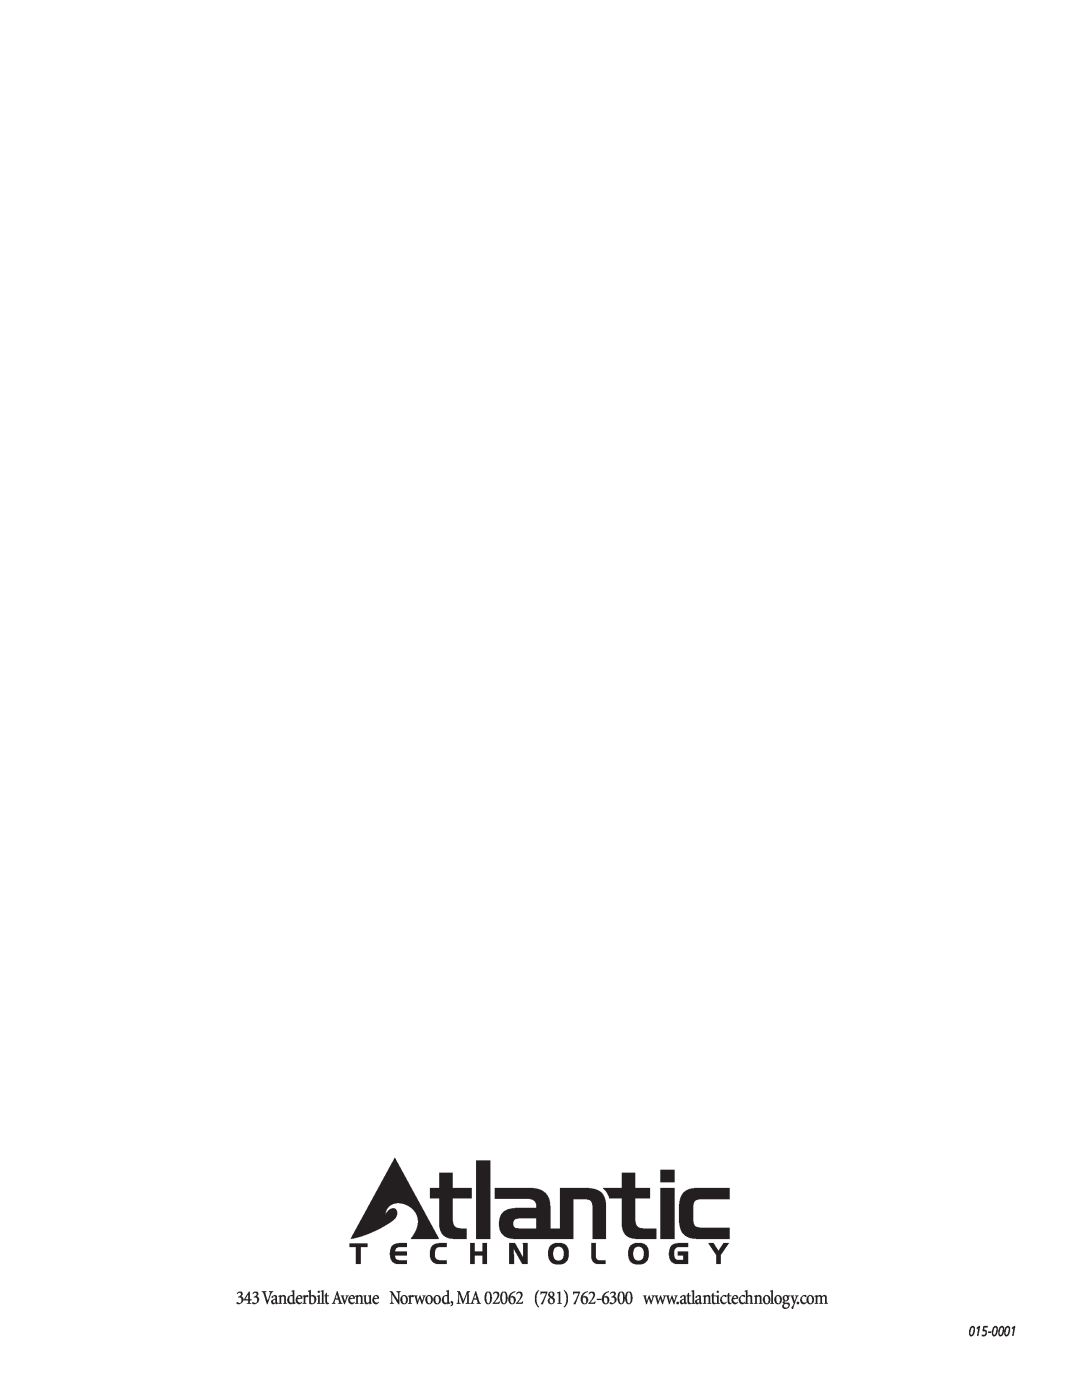 Atlantic Technology AT-1 instruction manual 015-0001 